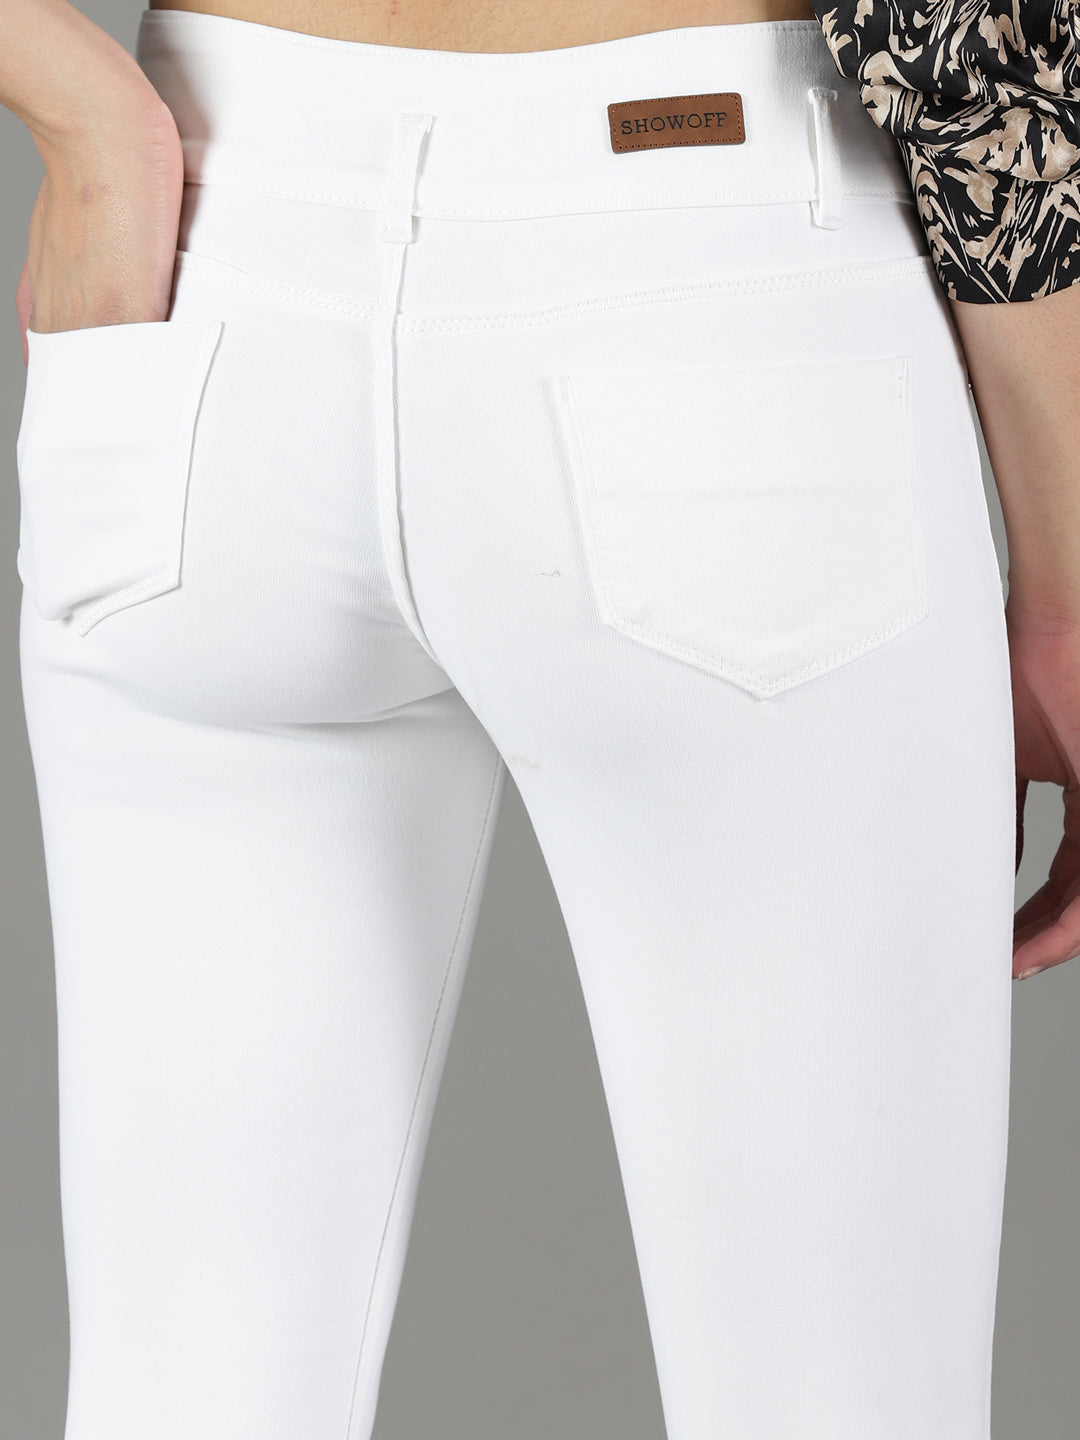 Women's White Solid Slim Fit Denim Jeans